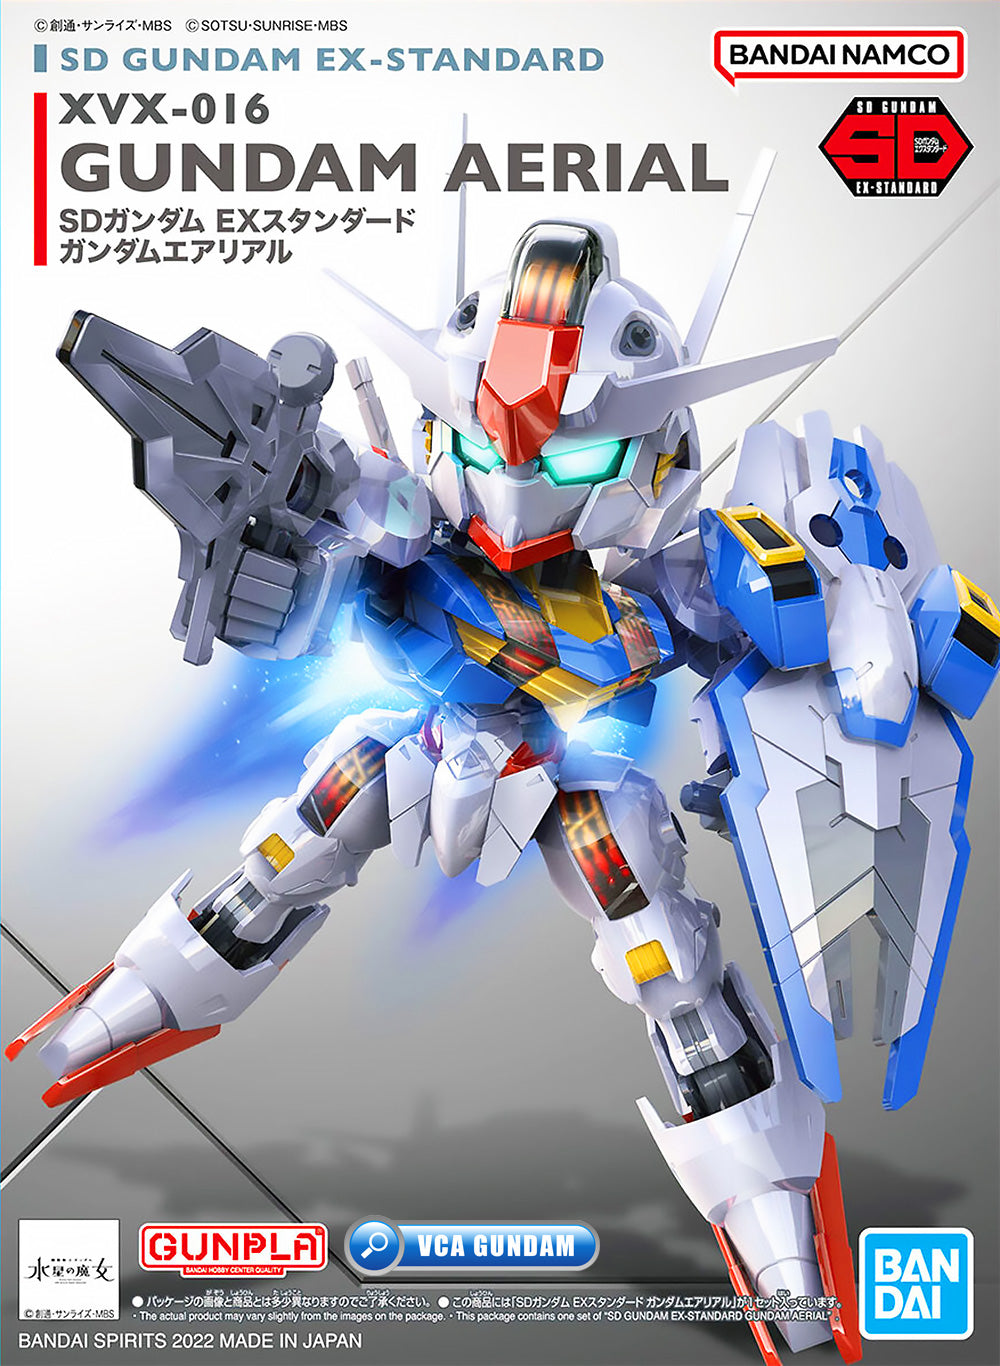 Bandai Gunpla SD EX Standard SDEX XVX-016 Gundam Aerial Plastic Model Action Toy VCA Singapore